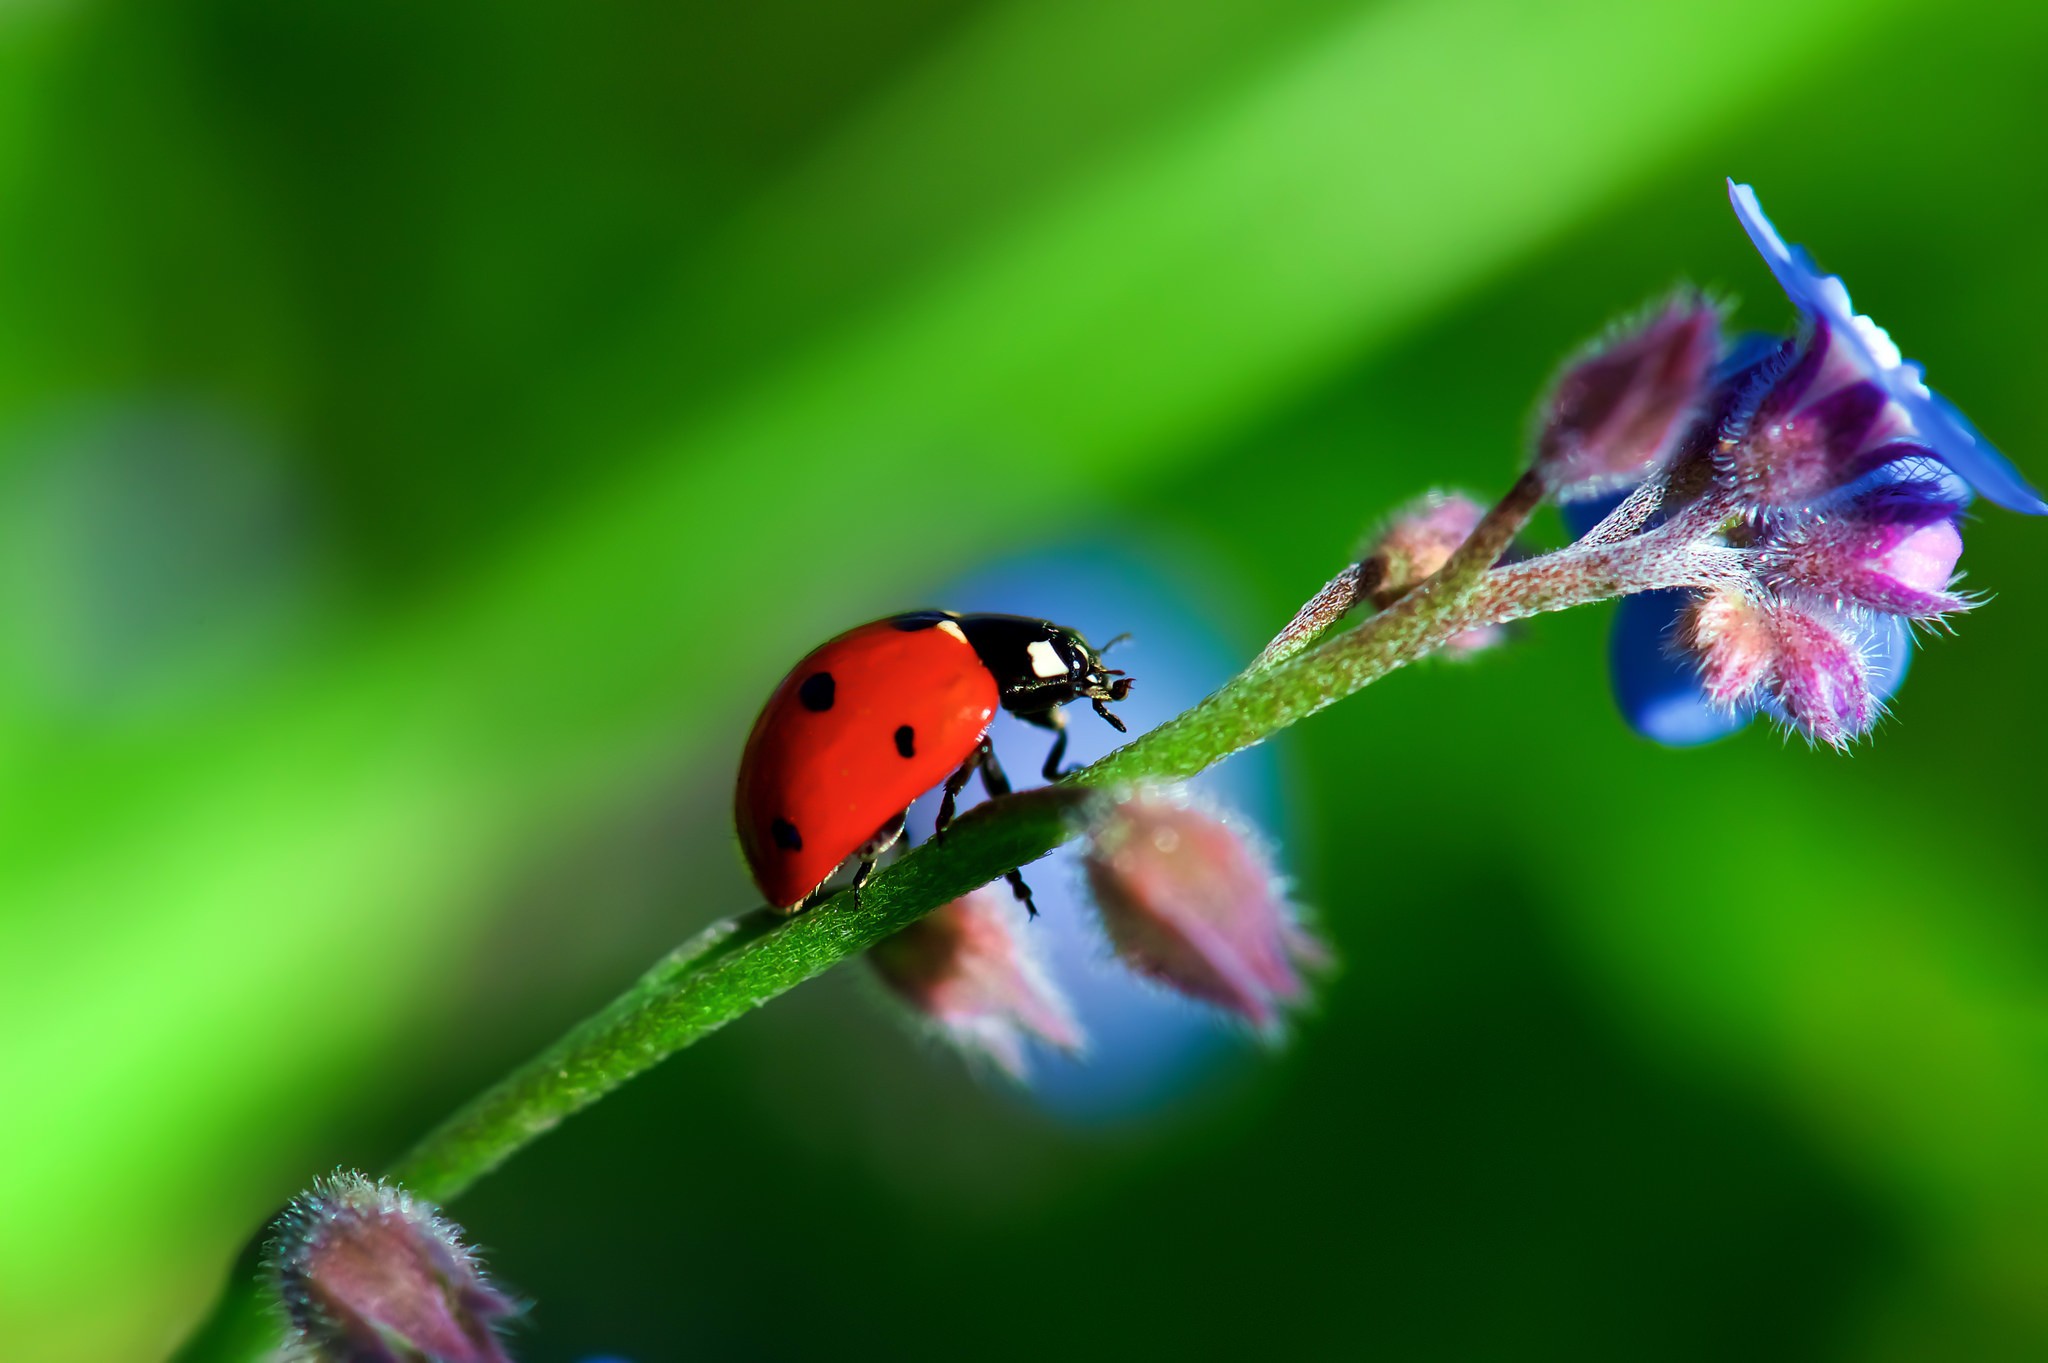 A ladybug crawls up the stem of a plant